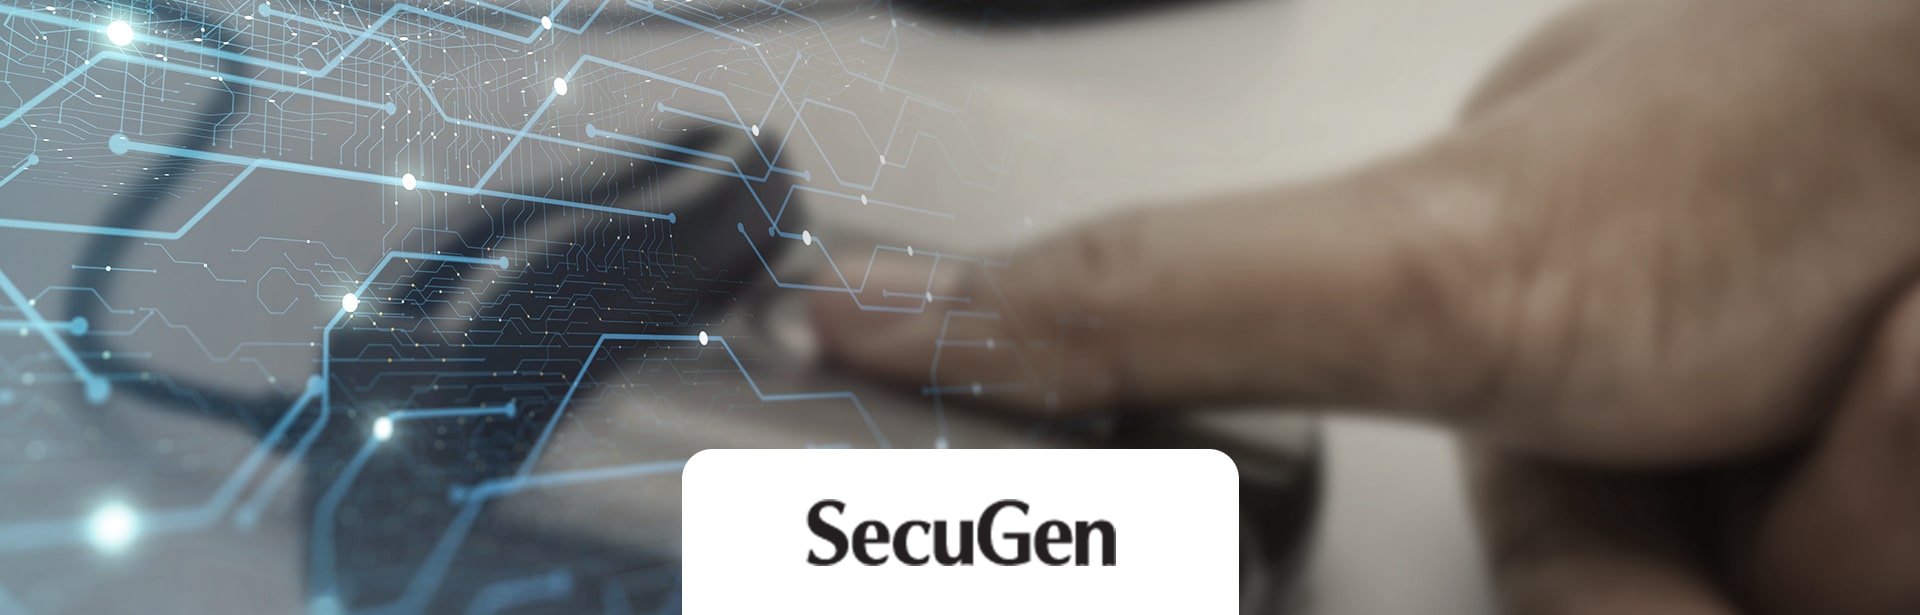 SecuGen product banner